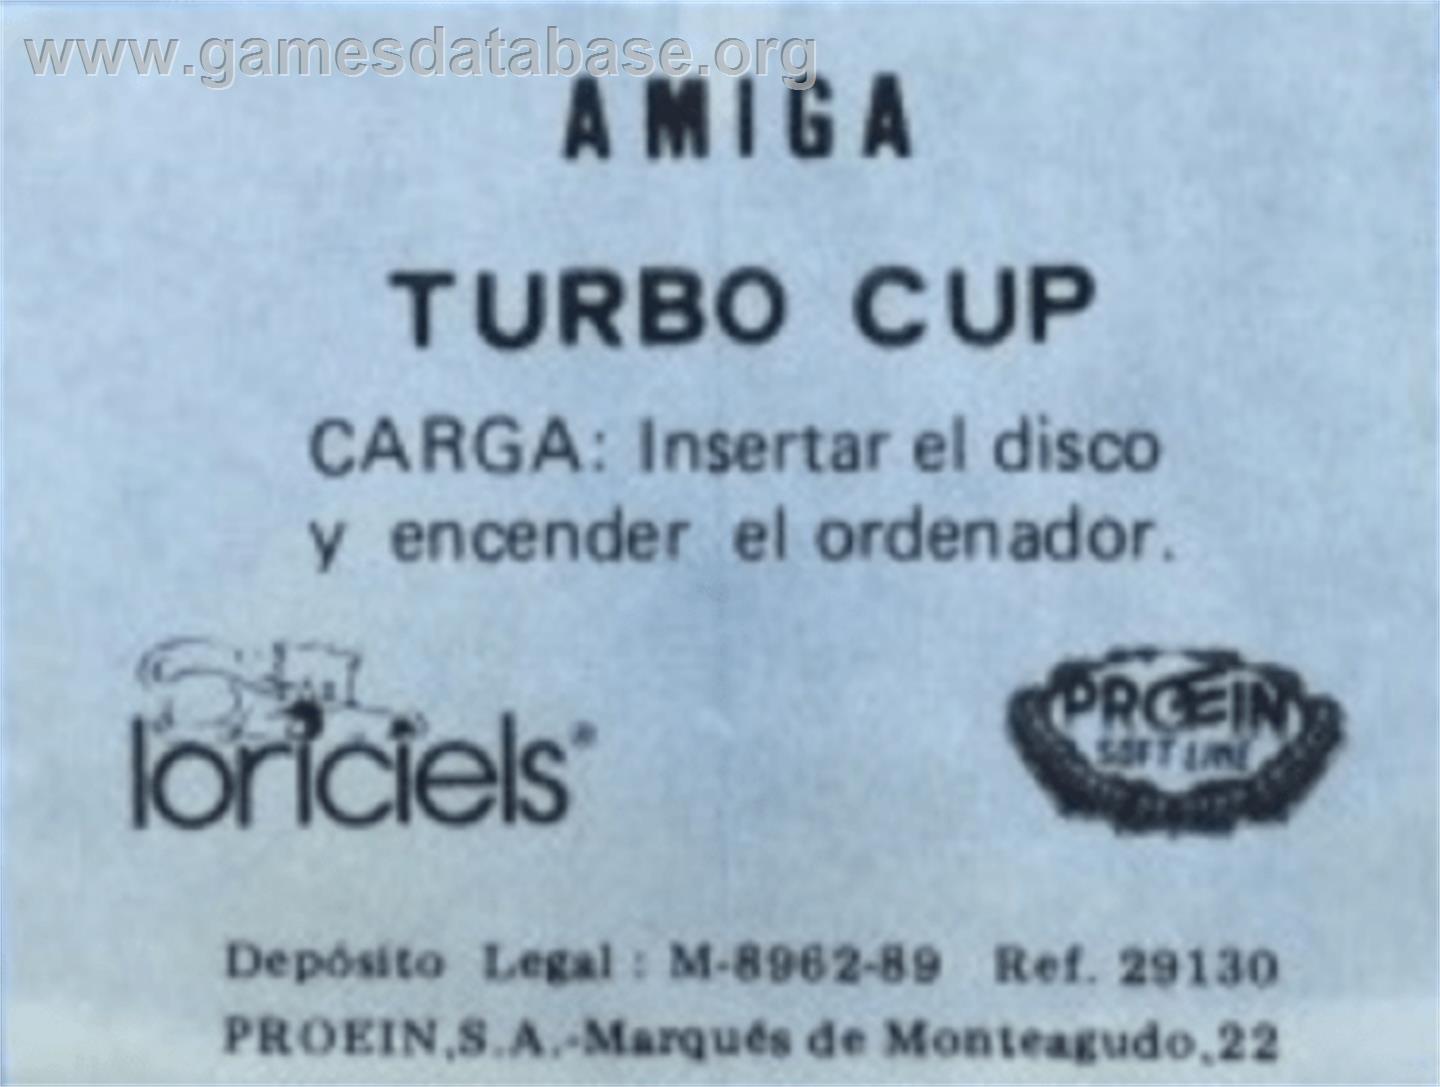 Turbo Cup - Commodore Amiga - Artwork - Cartridge Top